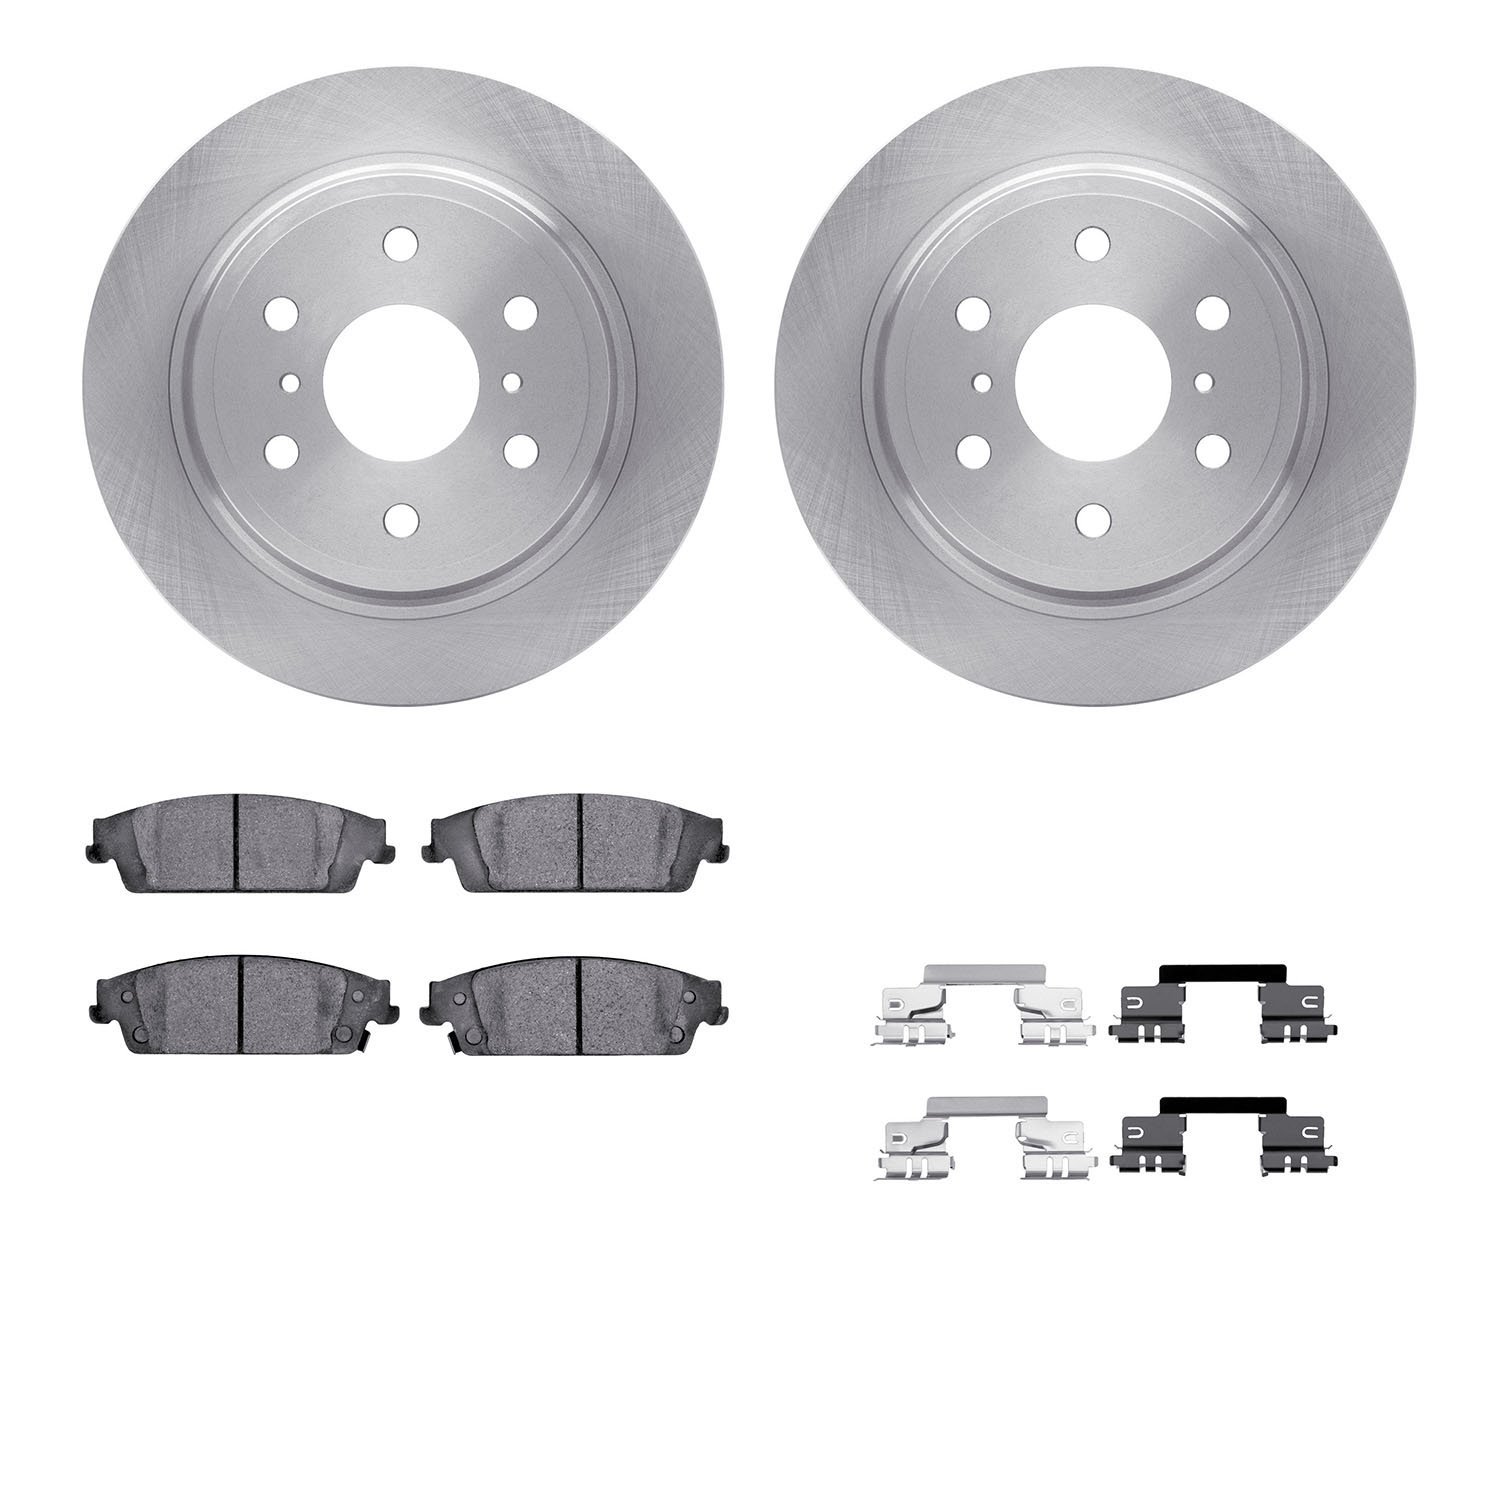 6412-48116 Brake Rotors with Ultimate-Duty Brake Pads Kit & Hardware, 2014-2020 GM, Position: Rear